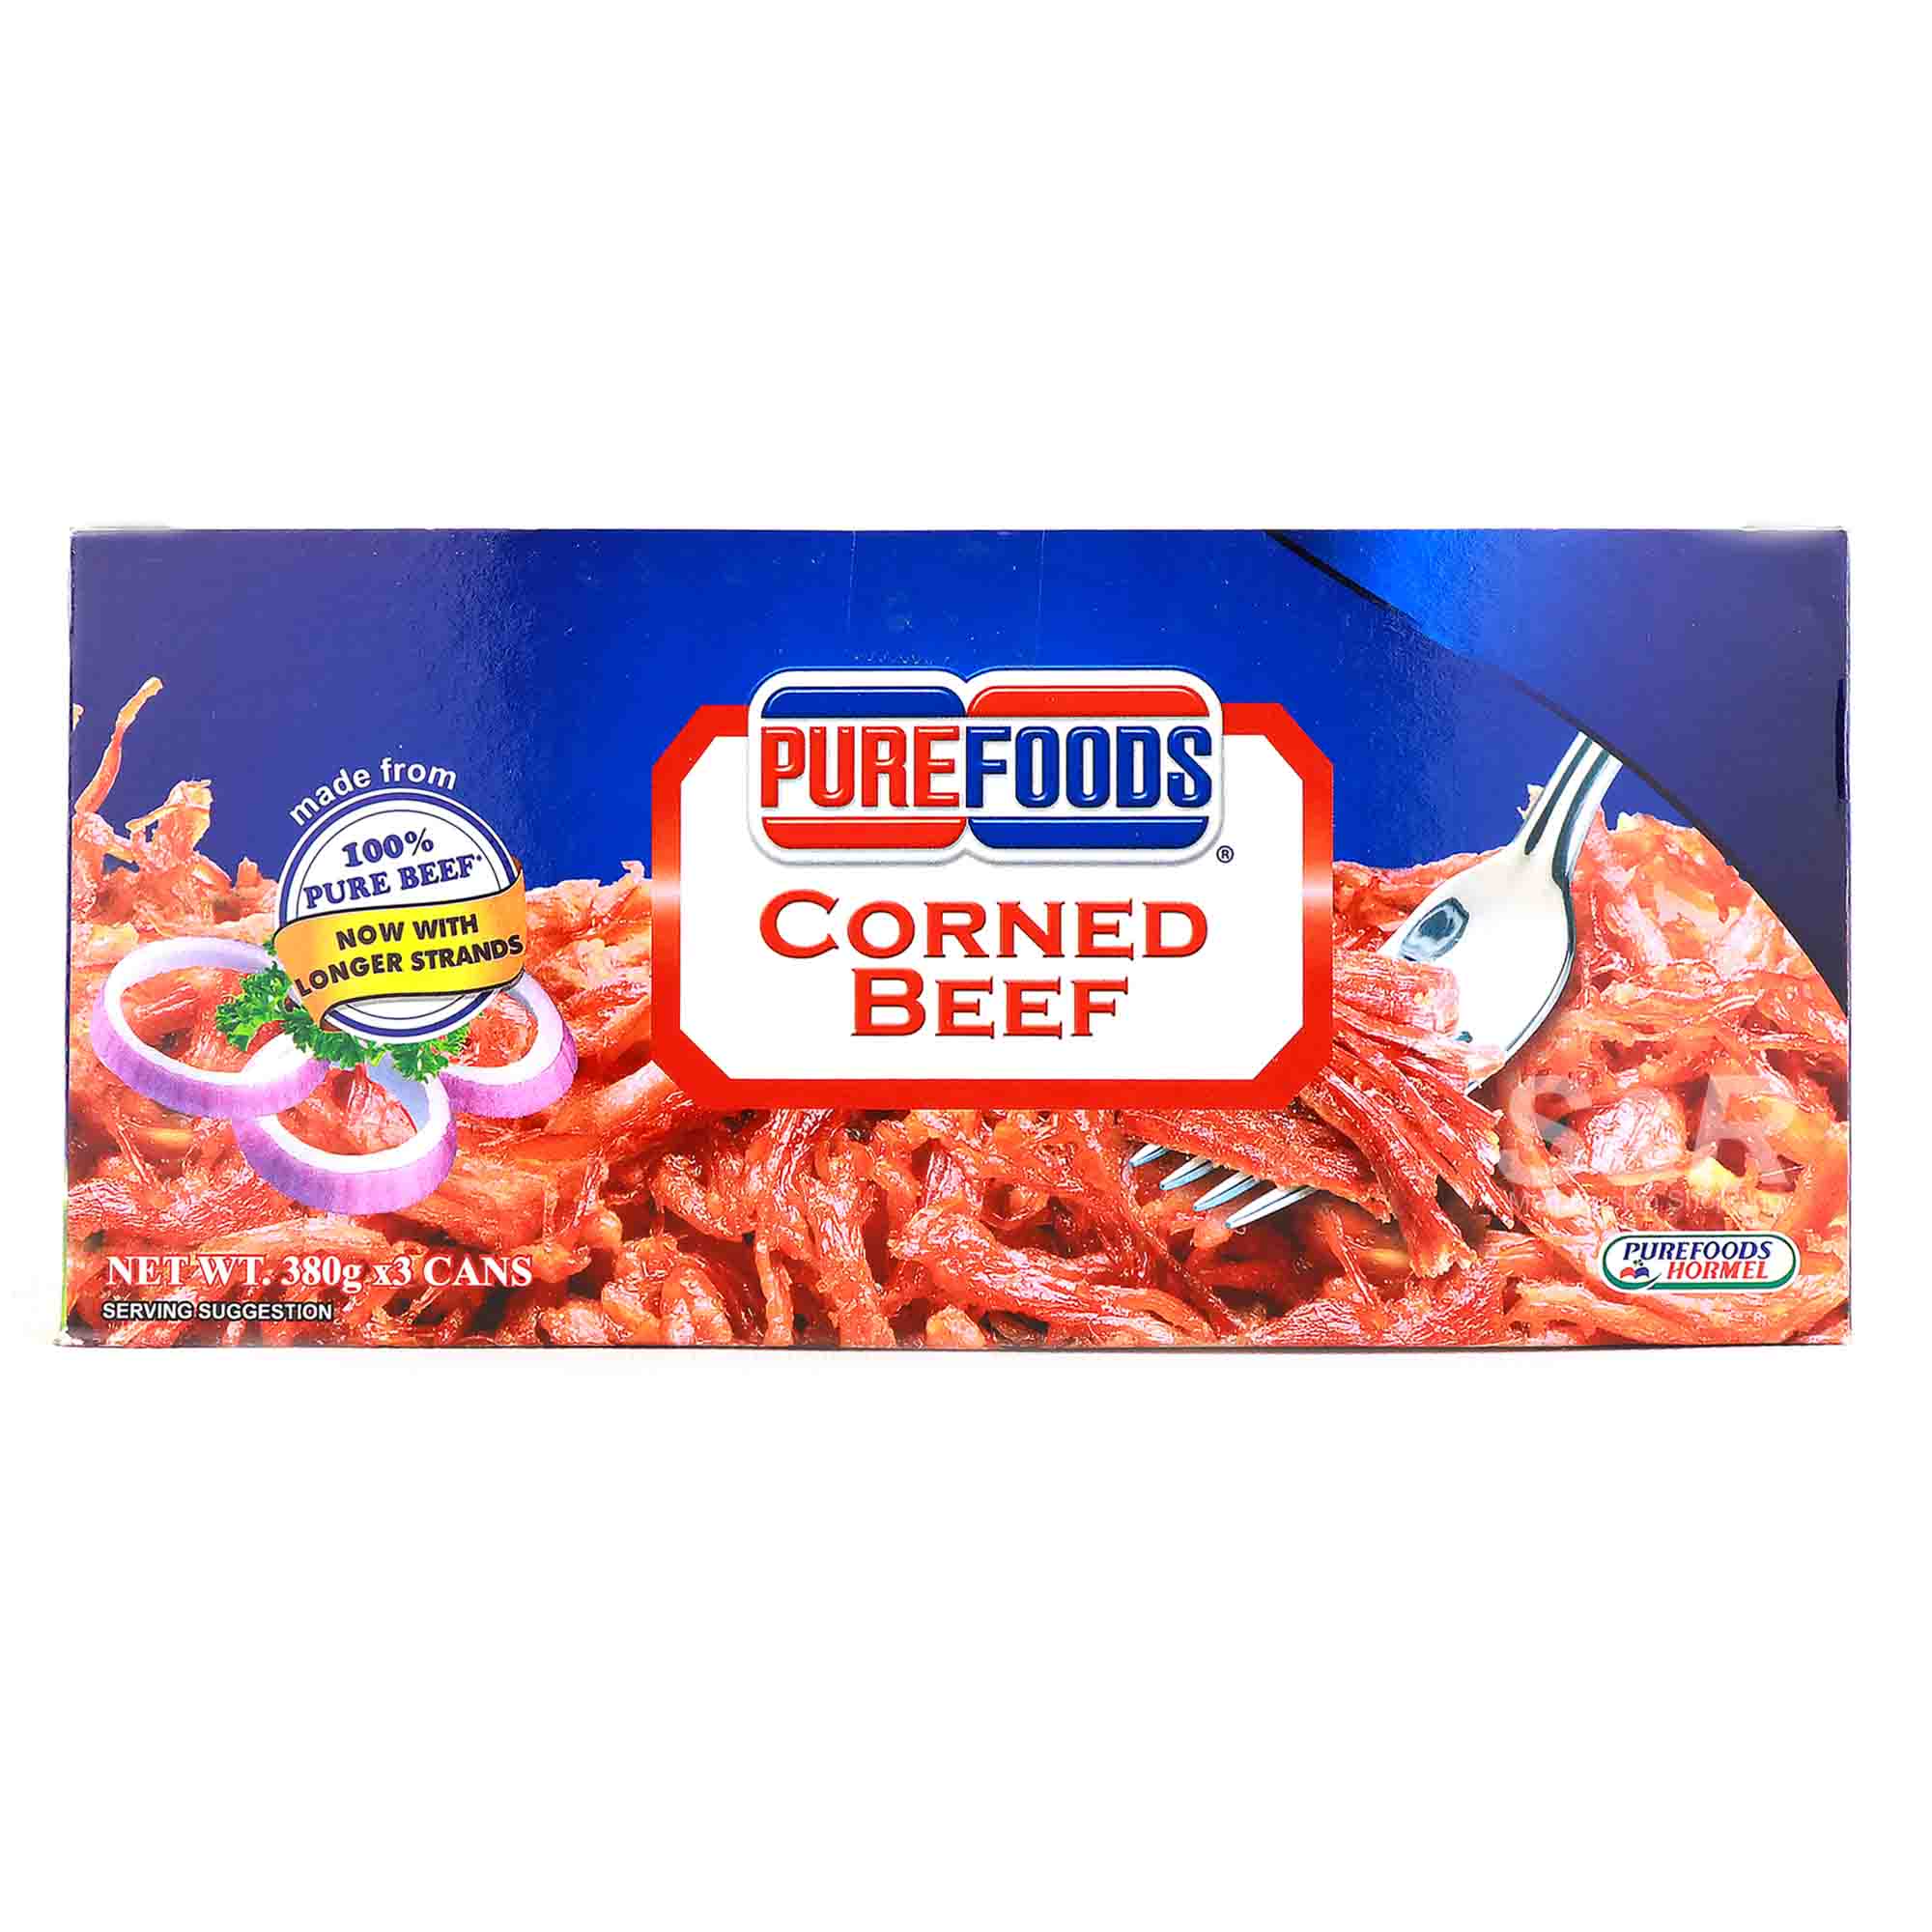 Purefoods Corned Beef 3pcs